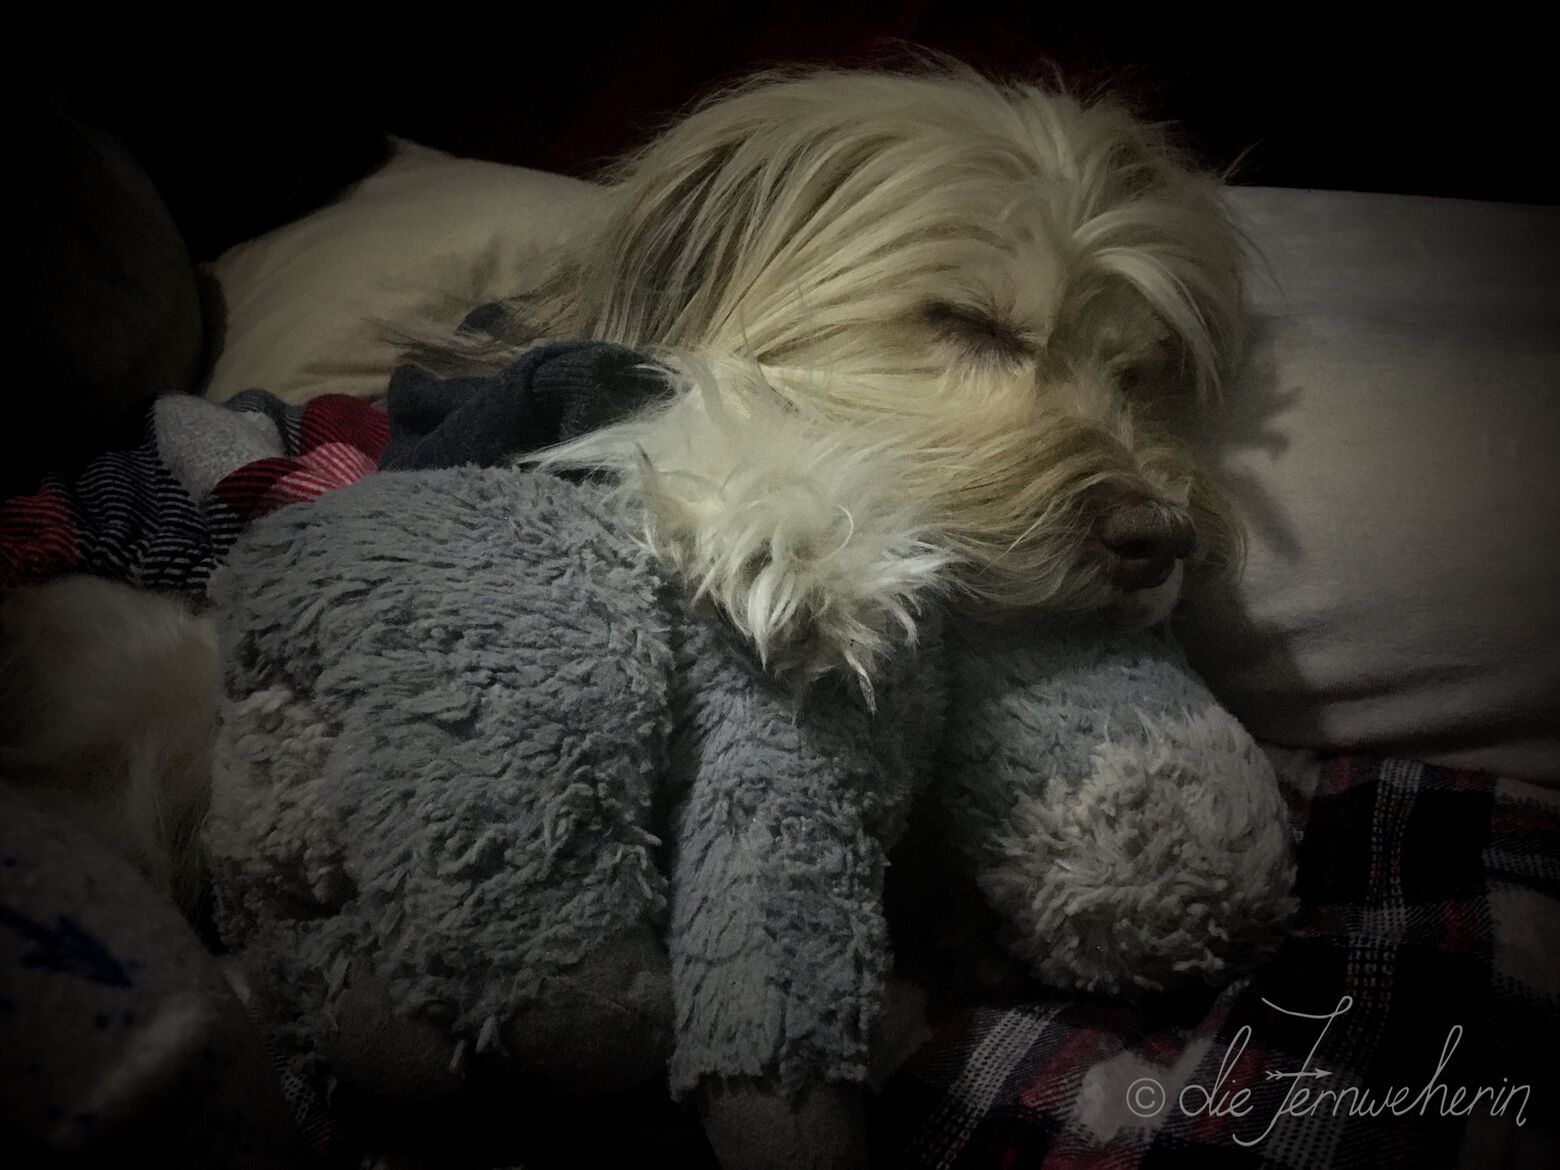 A dog wearing pyjamas sleeps while holding a stuffed animal.